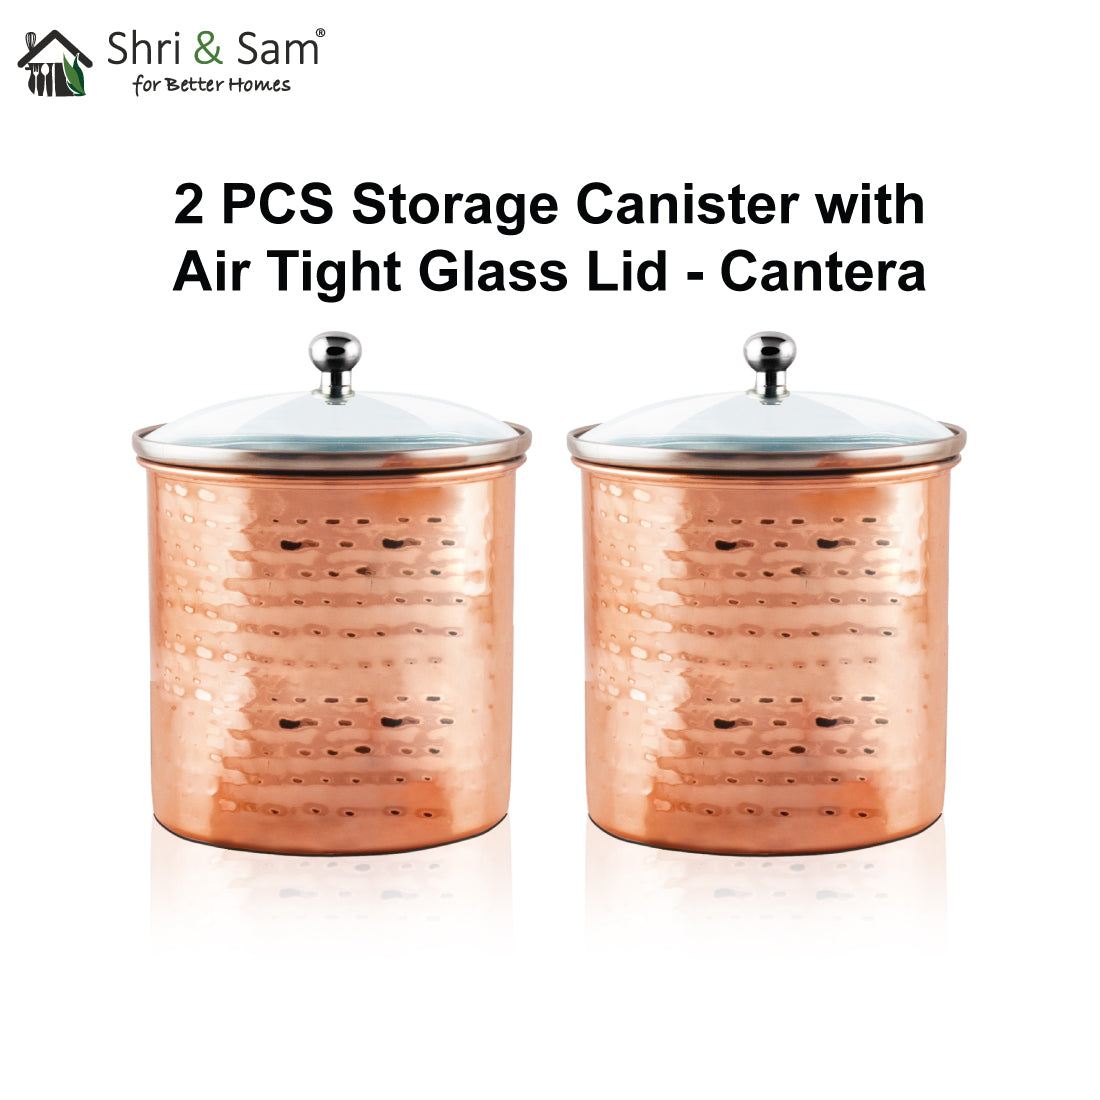 Jagdamba Cutlery Pvt Ltd. Serveware 2PCS - 700ML Storage Canister with air tight glass lid - Cantera